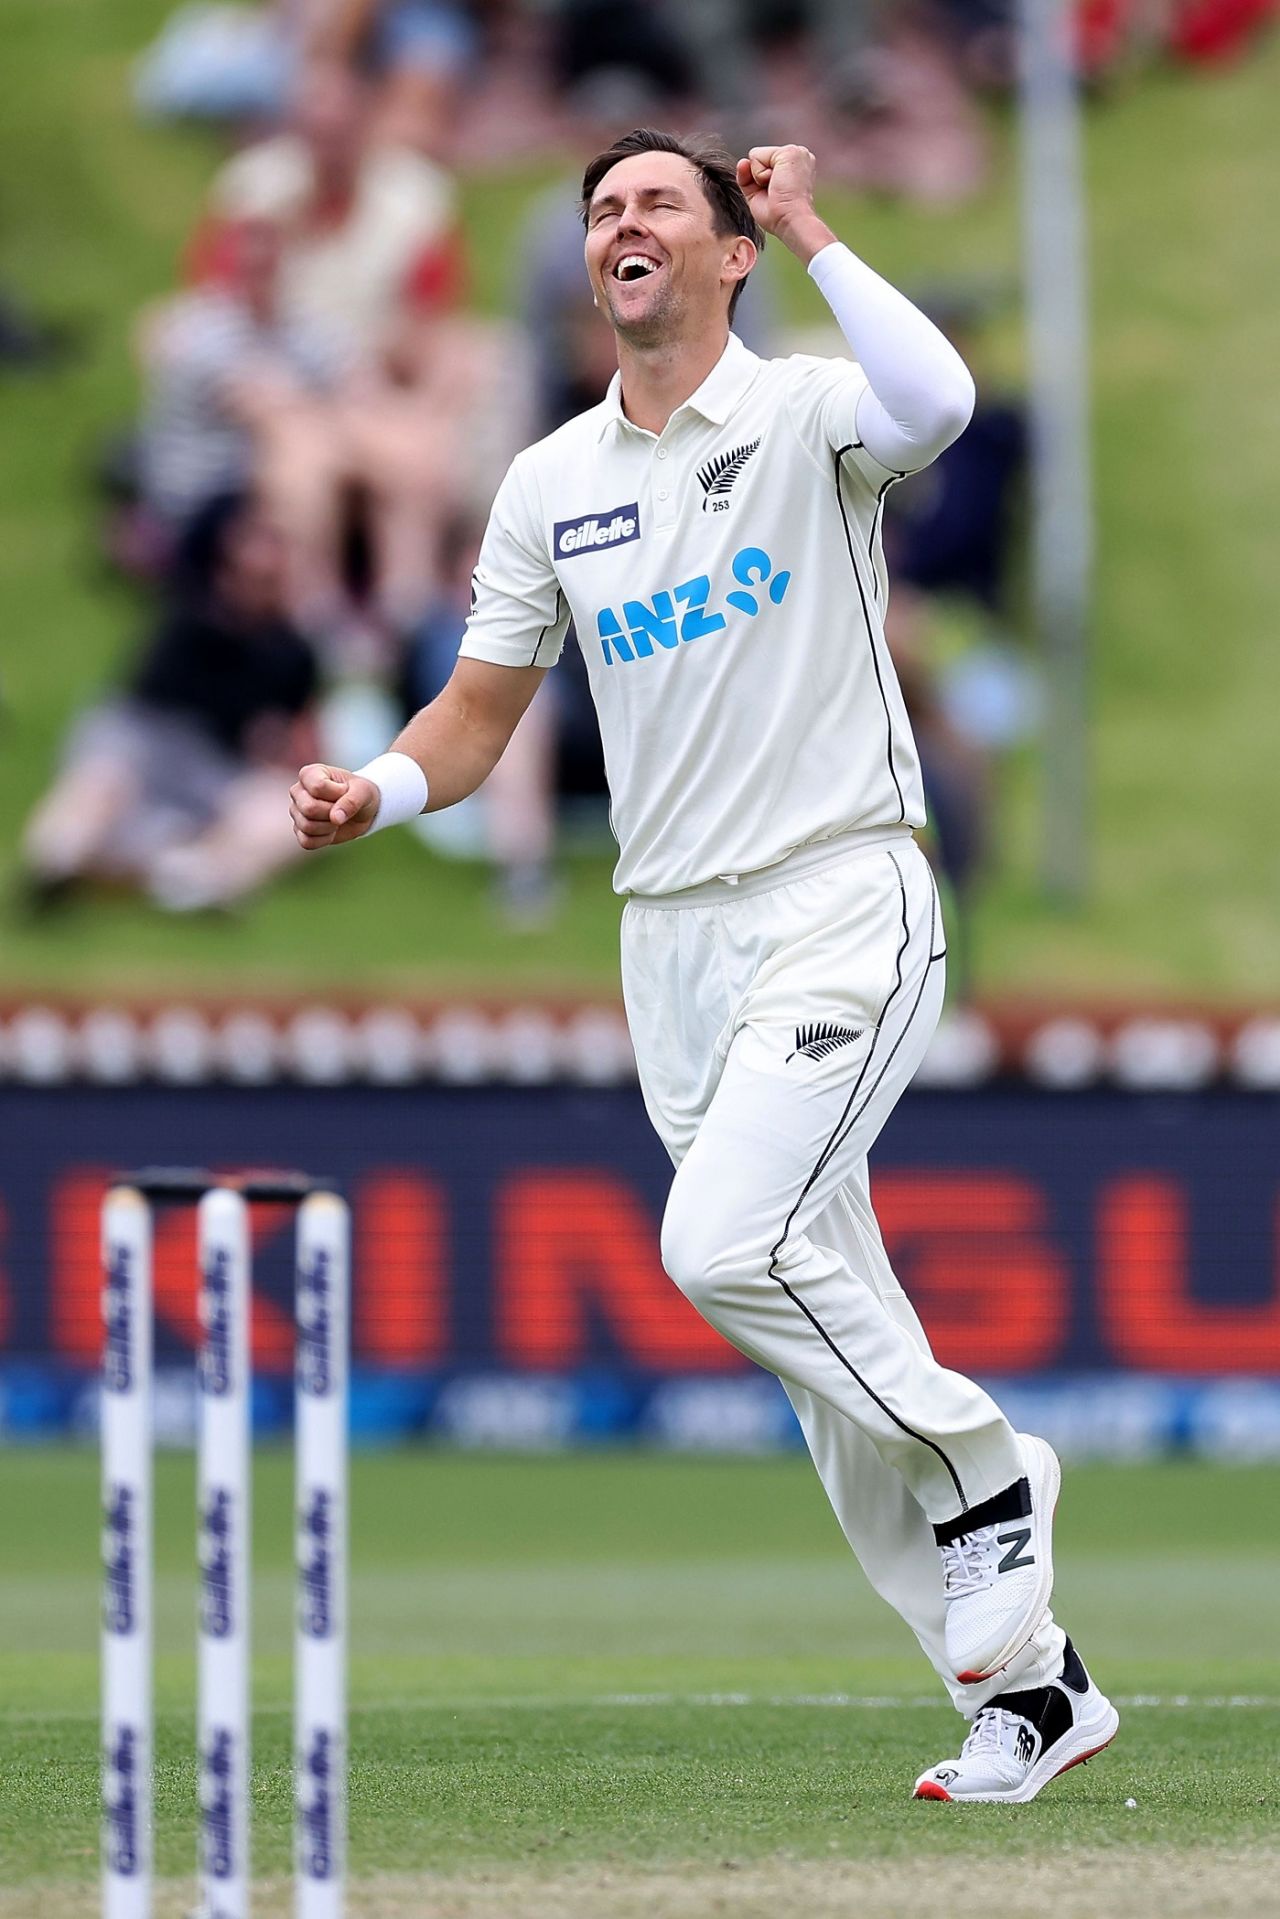 Trent Boult is elated after dismissing Kraigg Brathwaite, New Zealand vs West Indies, 2nd Test, Wellington, 3rd day, December 13, 2020